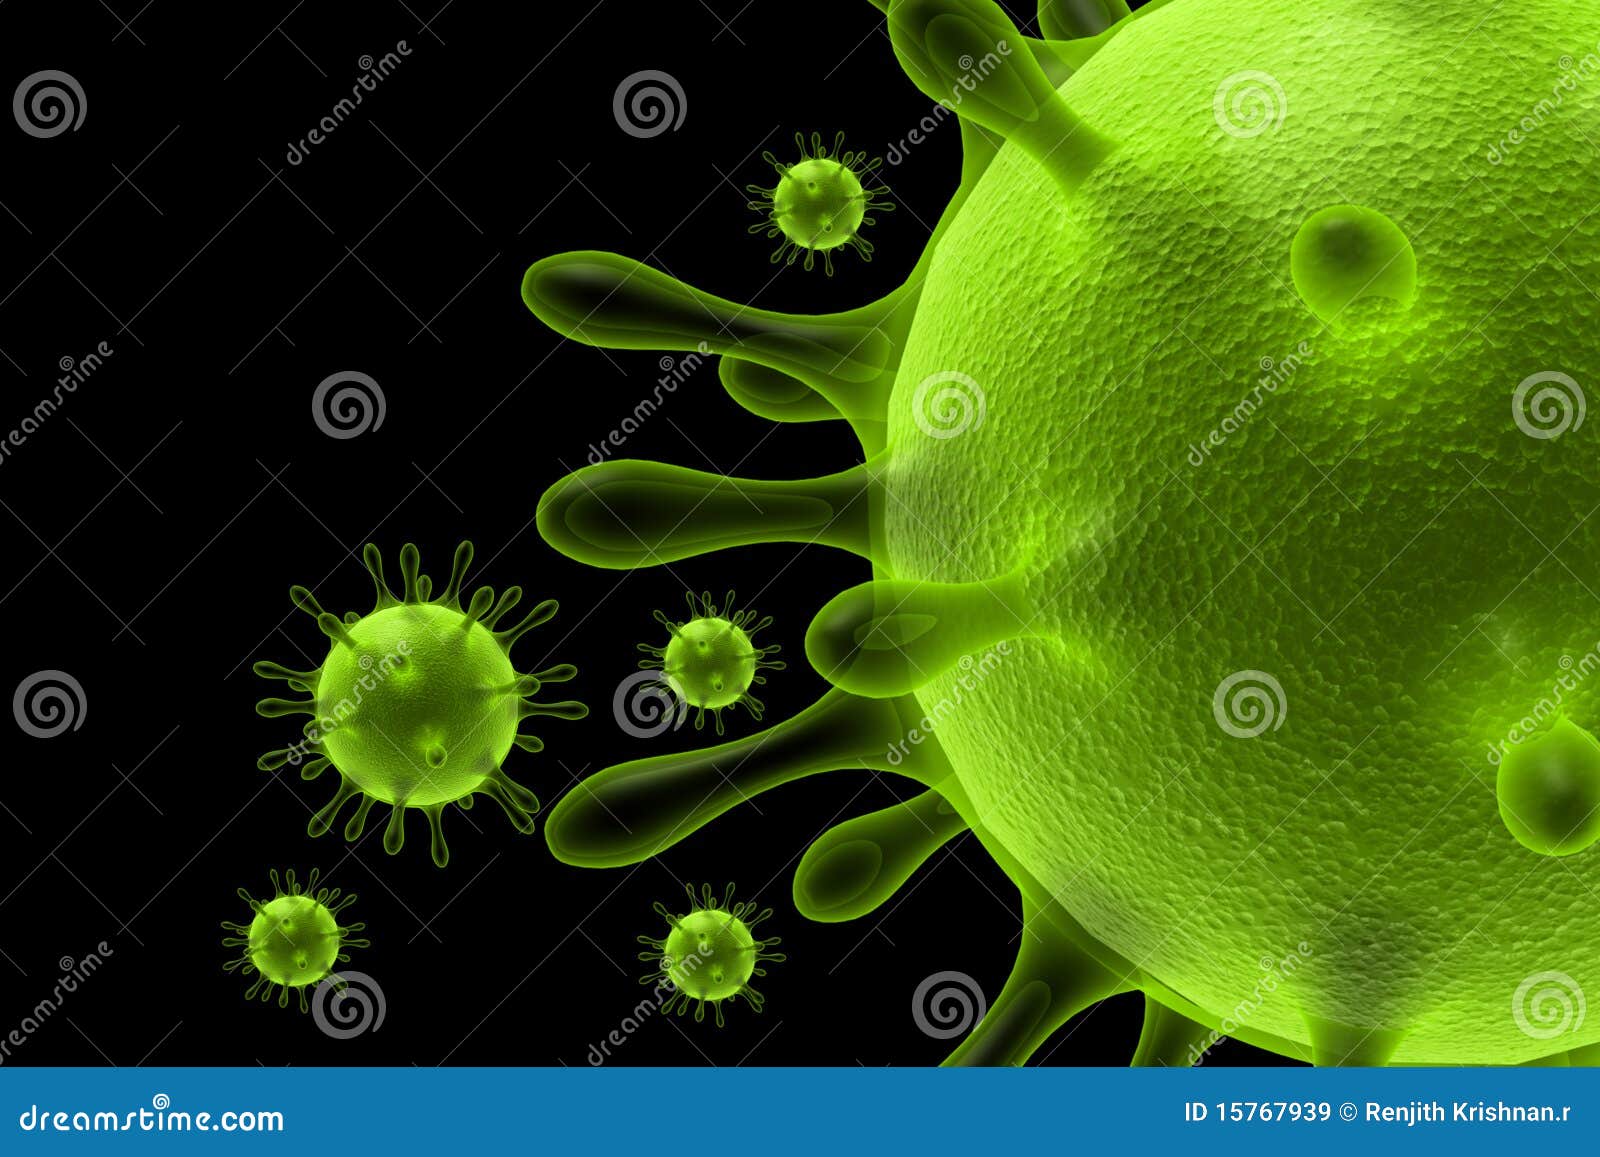 Sars virus stock illustration. Illustration of cell, biology - 15767939